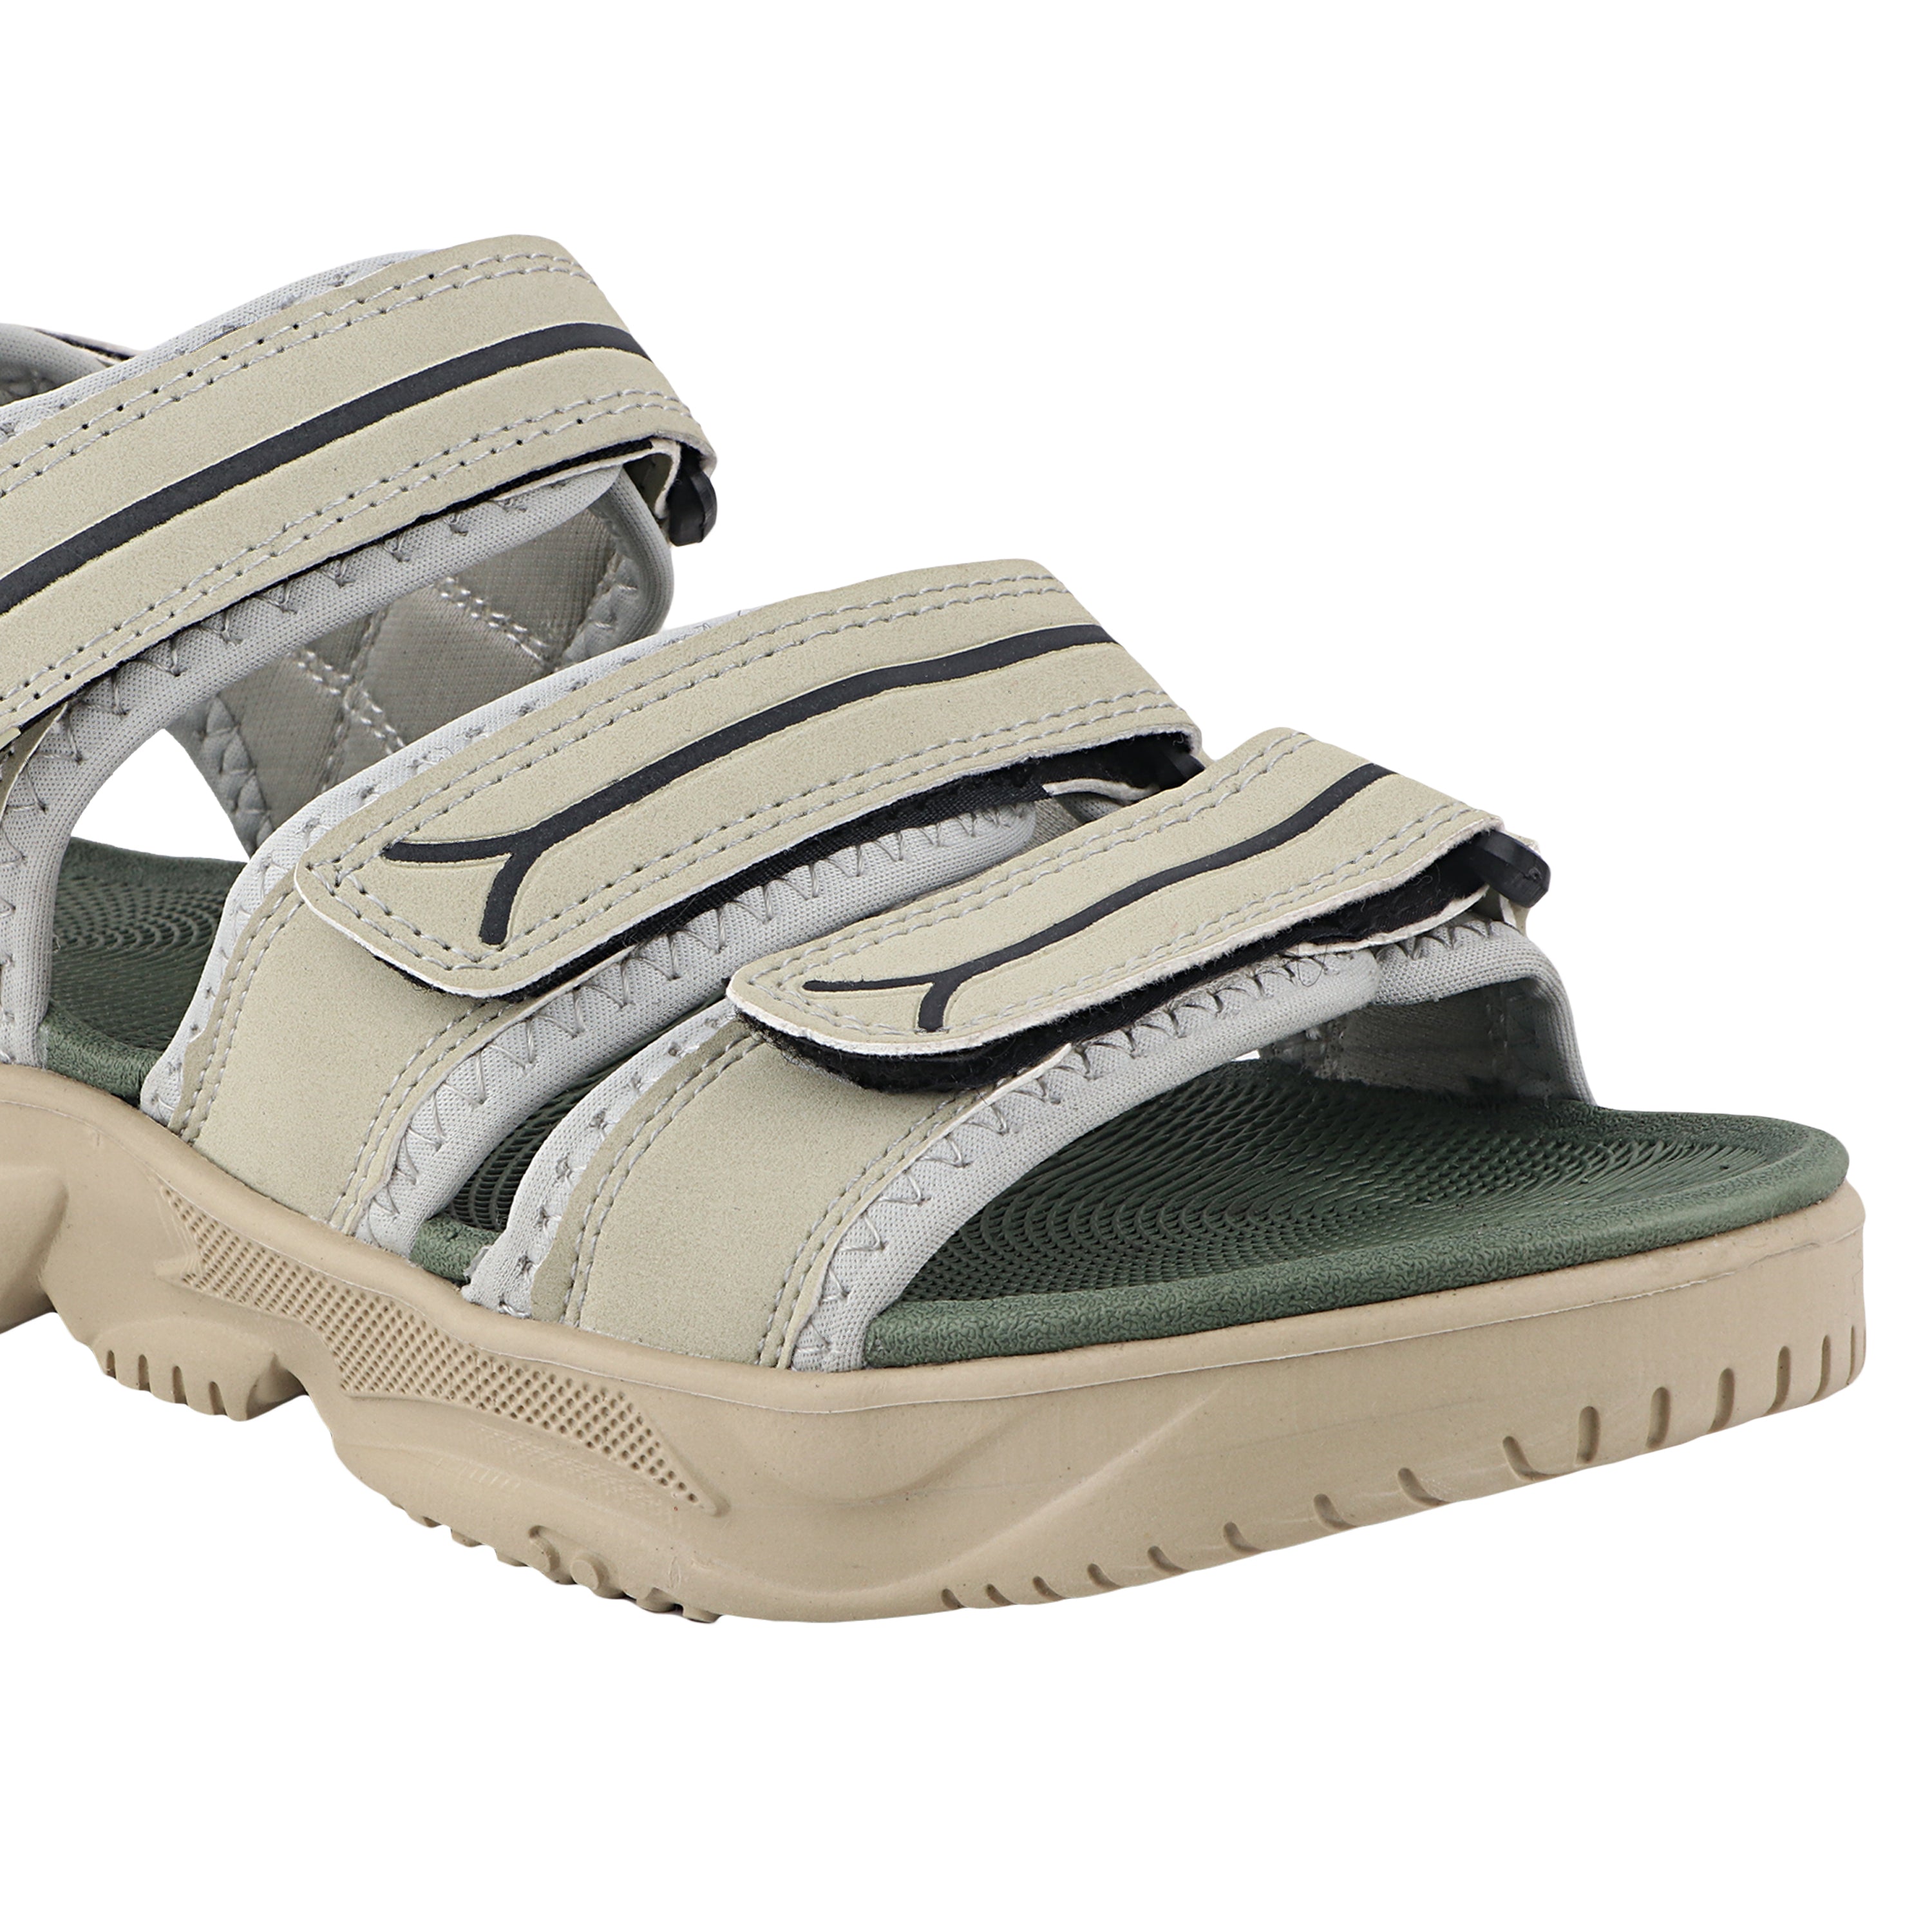 Fuel Keta Sandals For Men's (Beige-Olive)